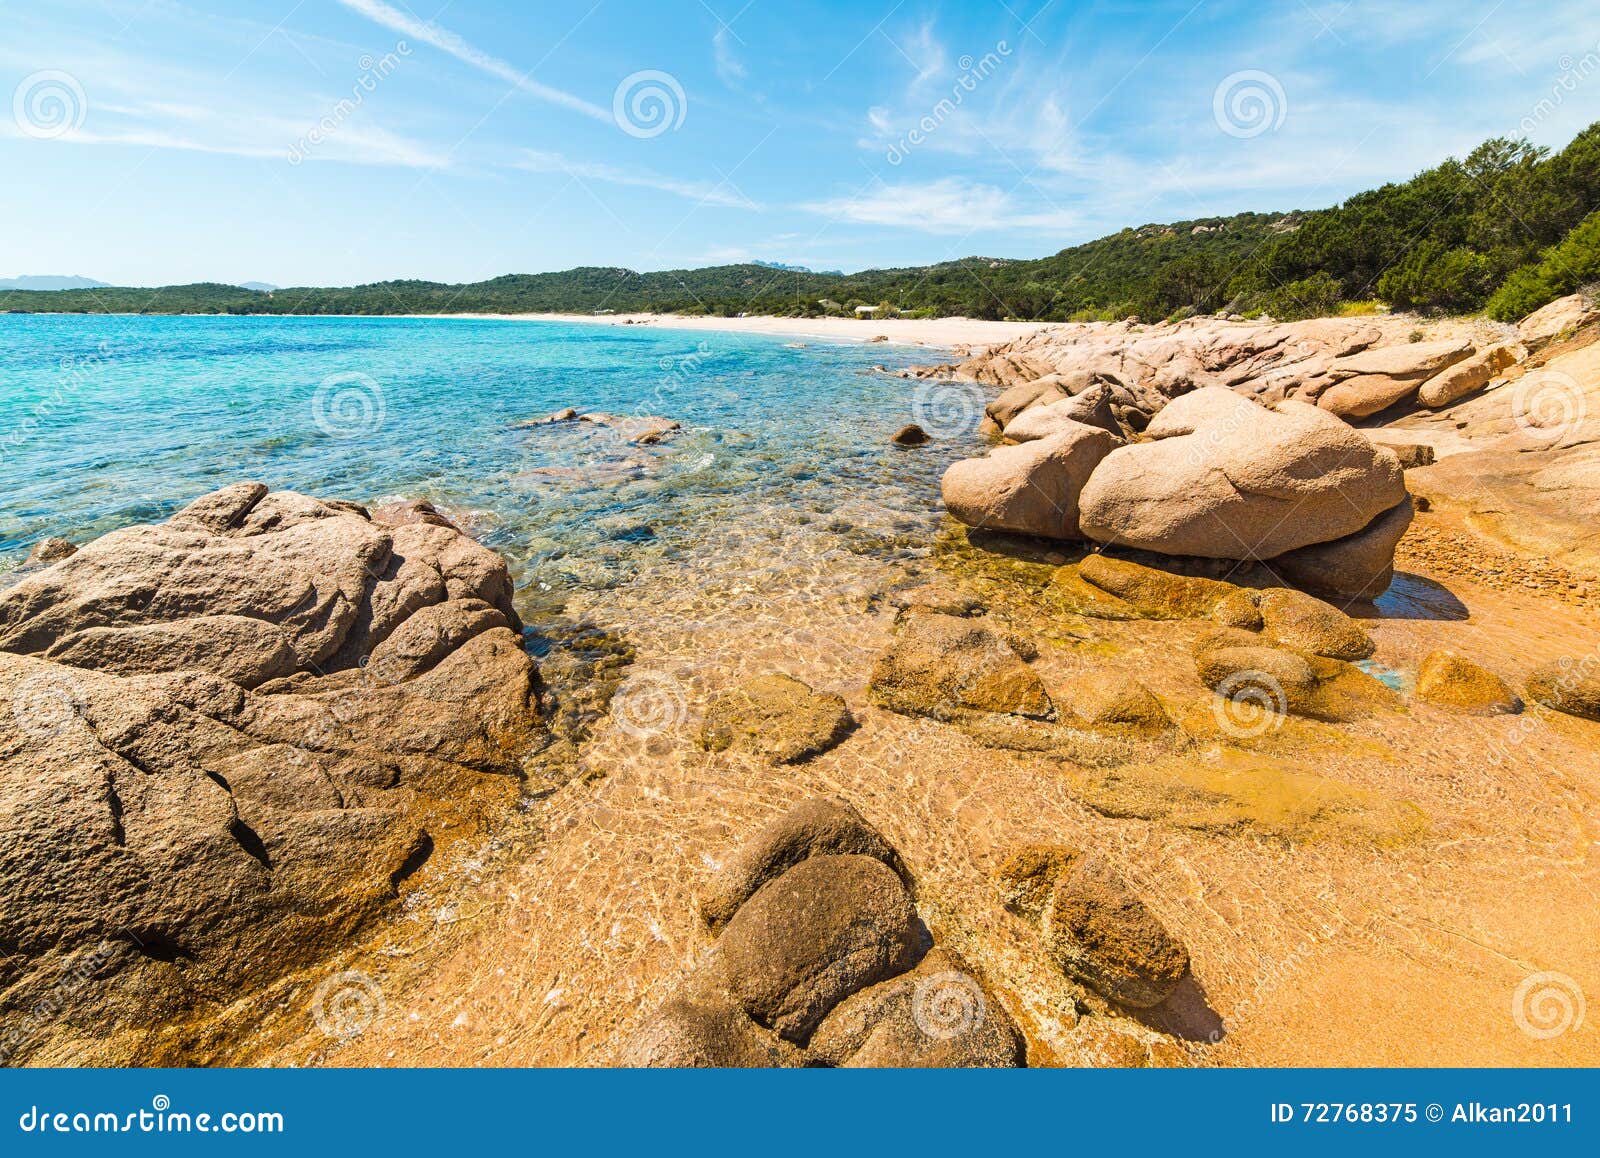 rocks in liscia ruja beach